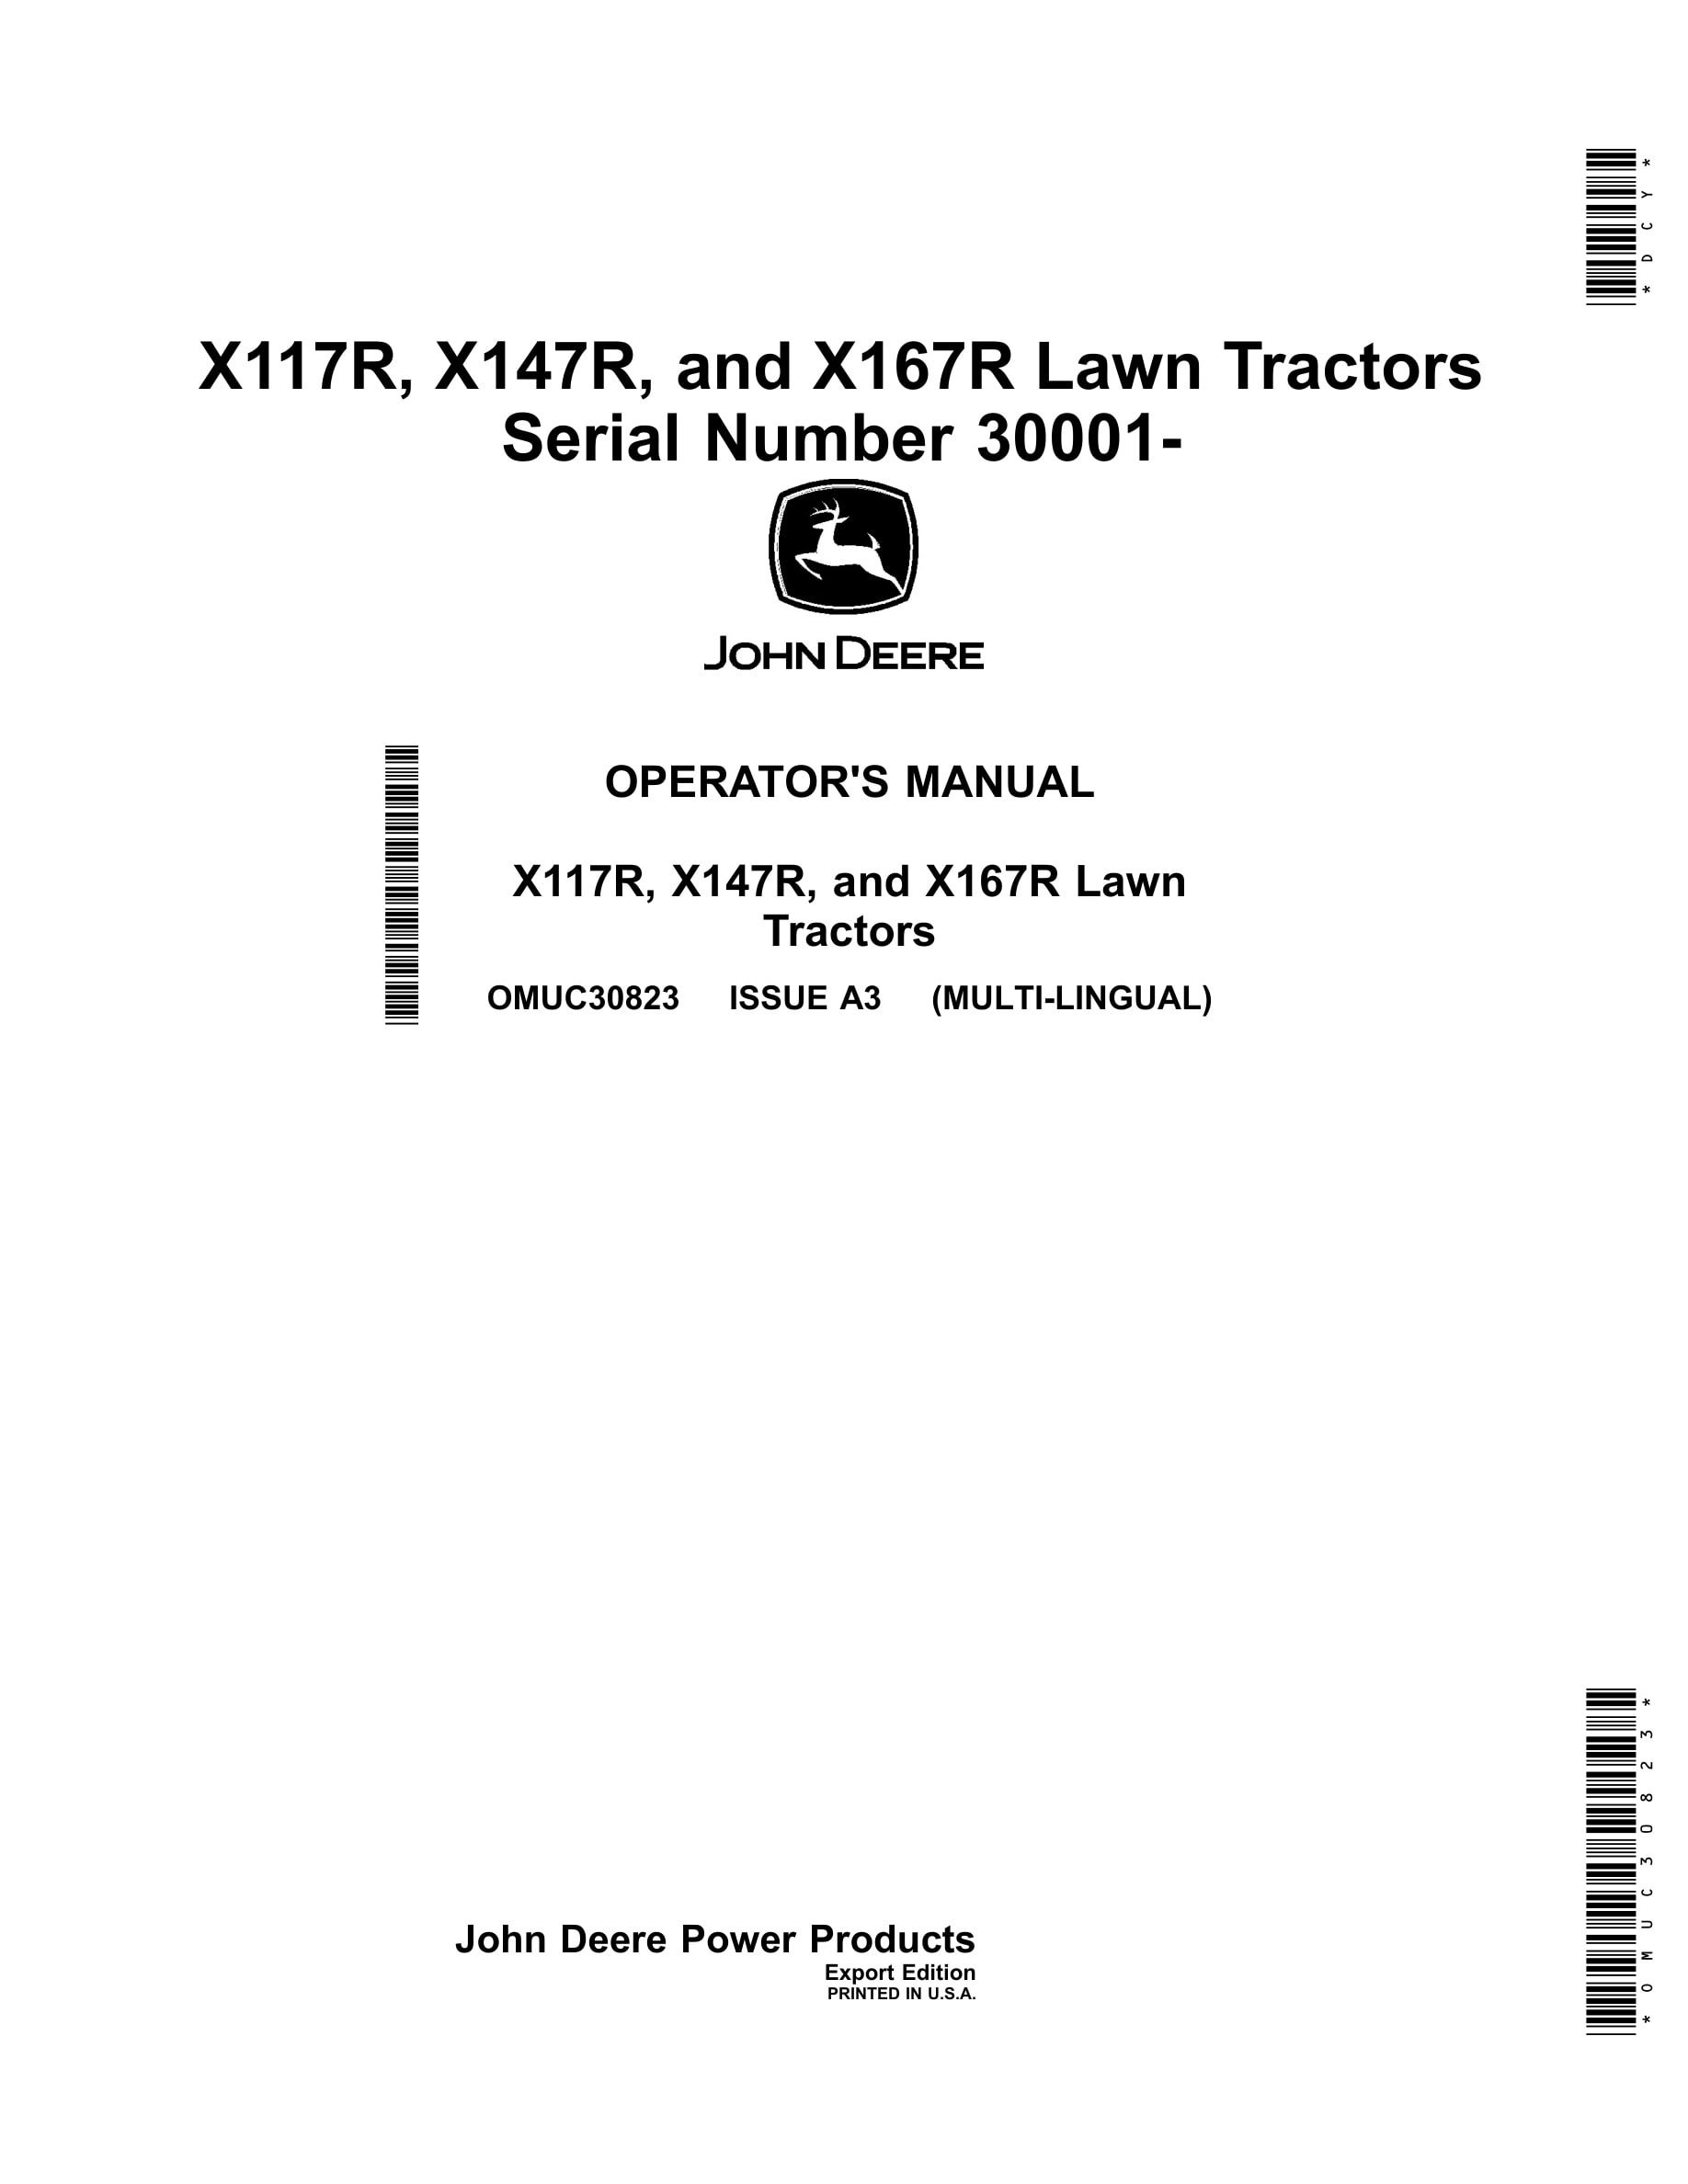 John Deere X117r, X147r, And X167r Lawn Tractors Operator Manuals OMUC30823-1